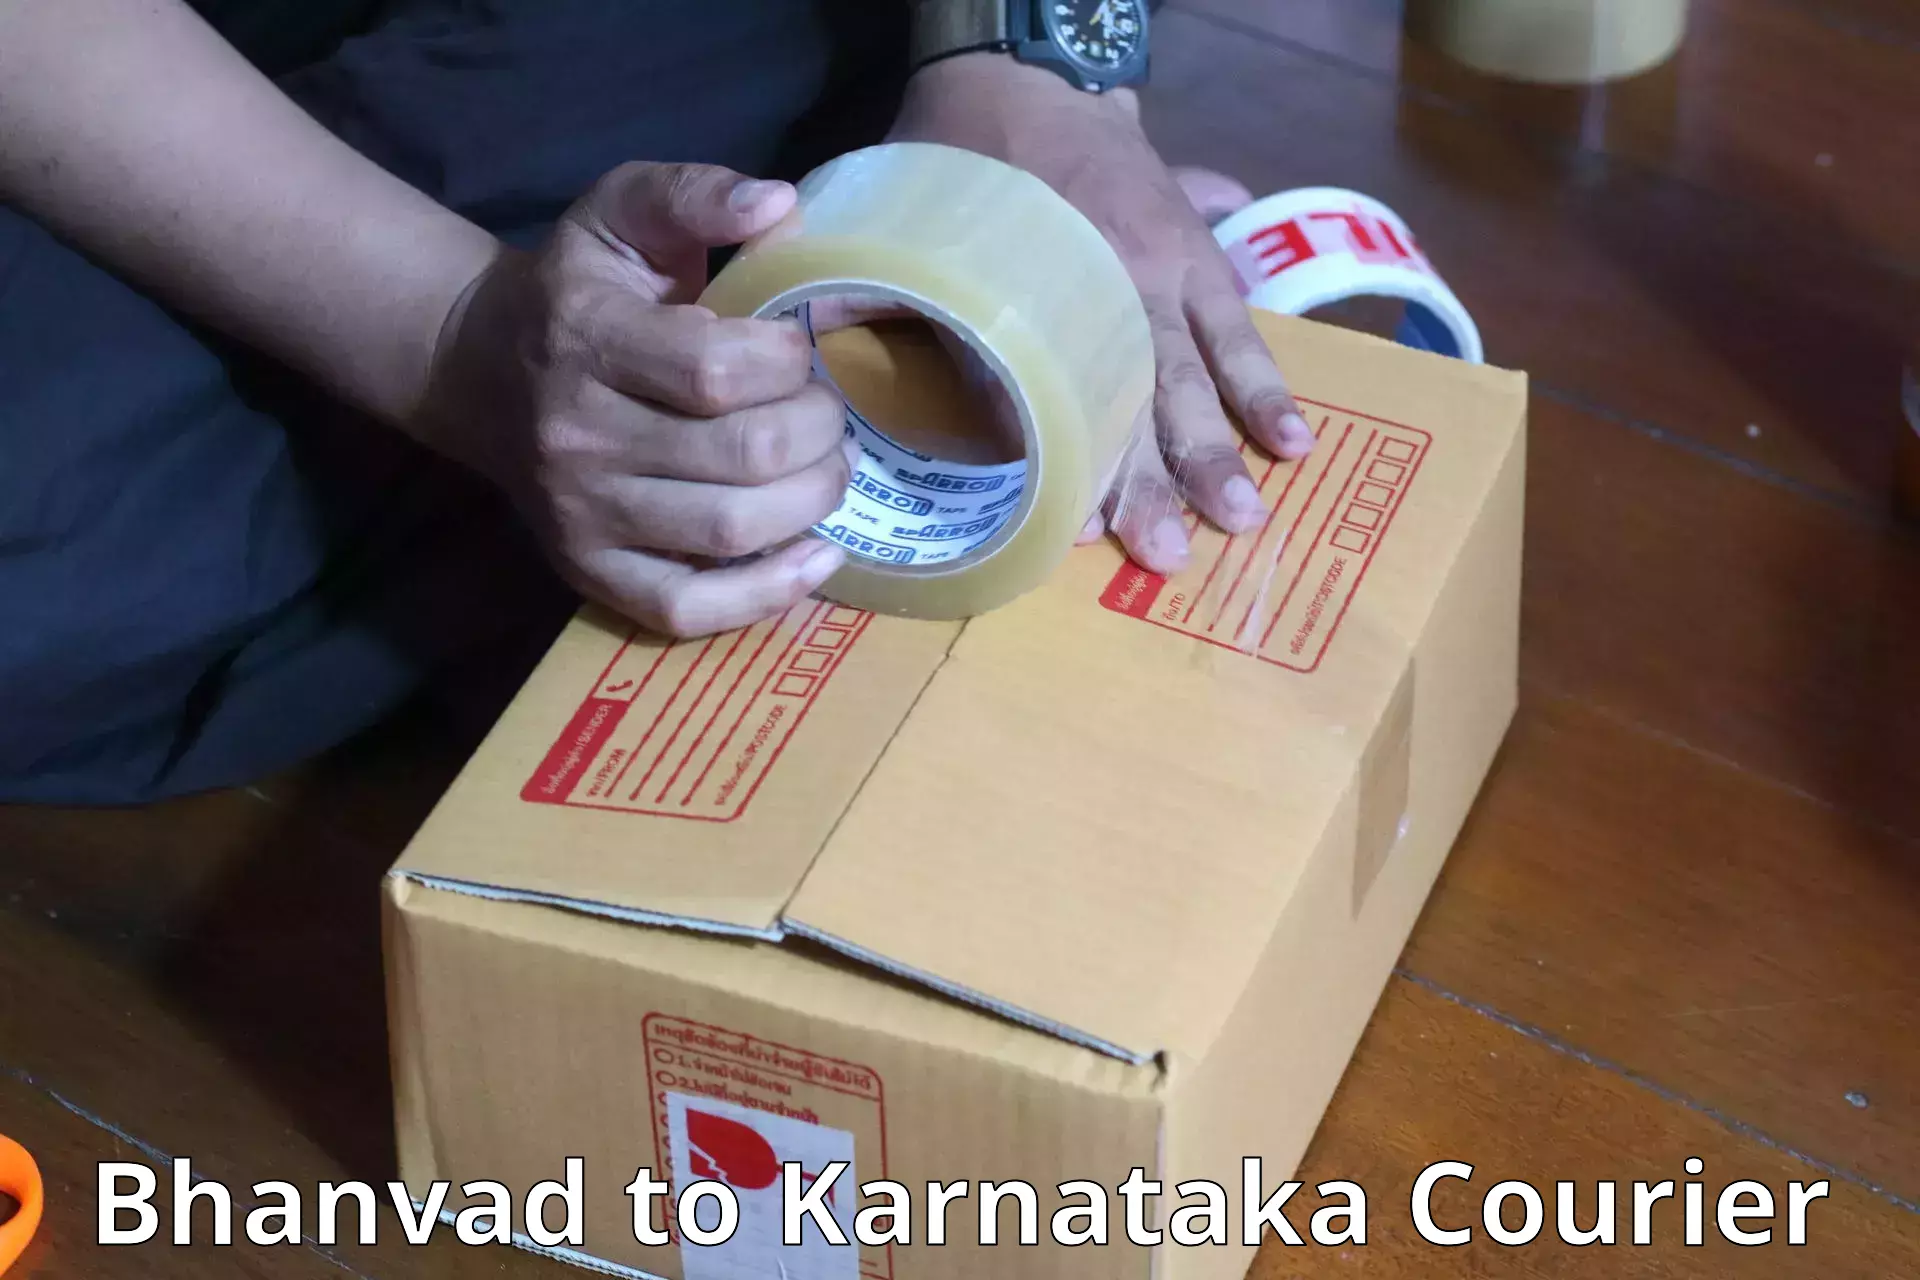 Luggage shipment tracking Bhanvad to Mandya